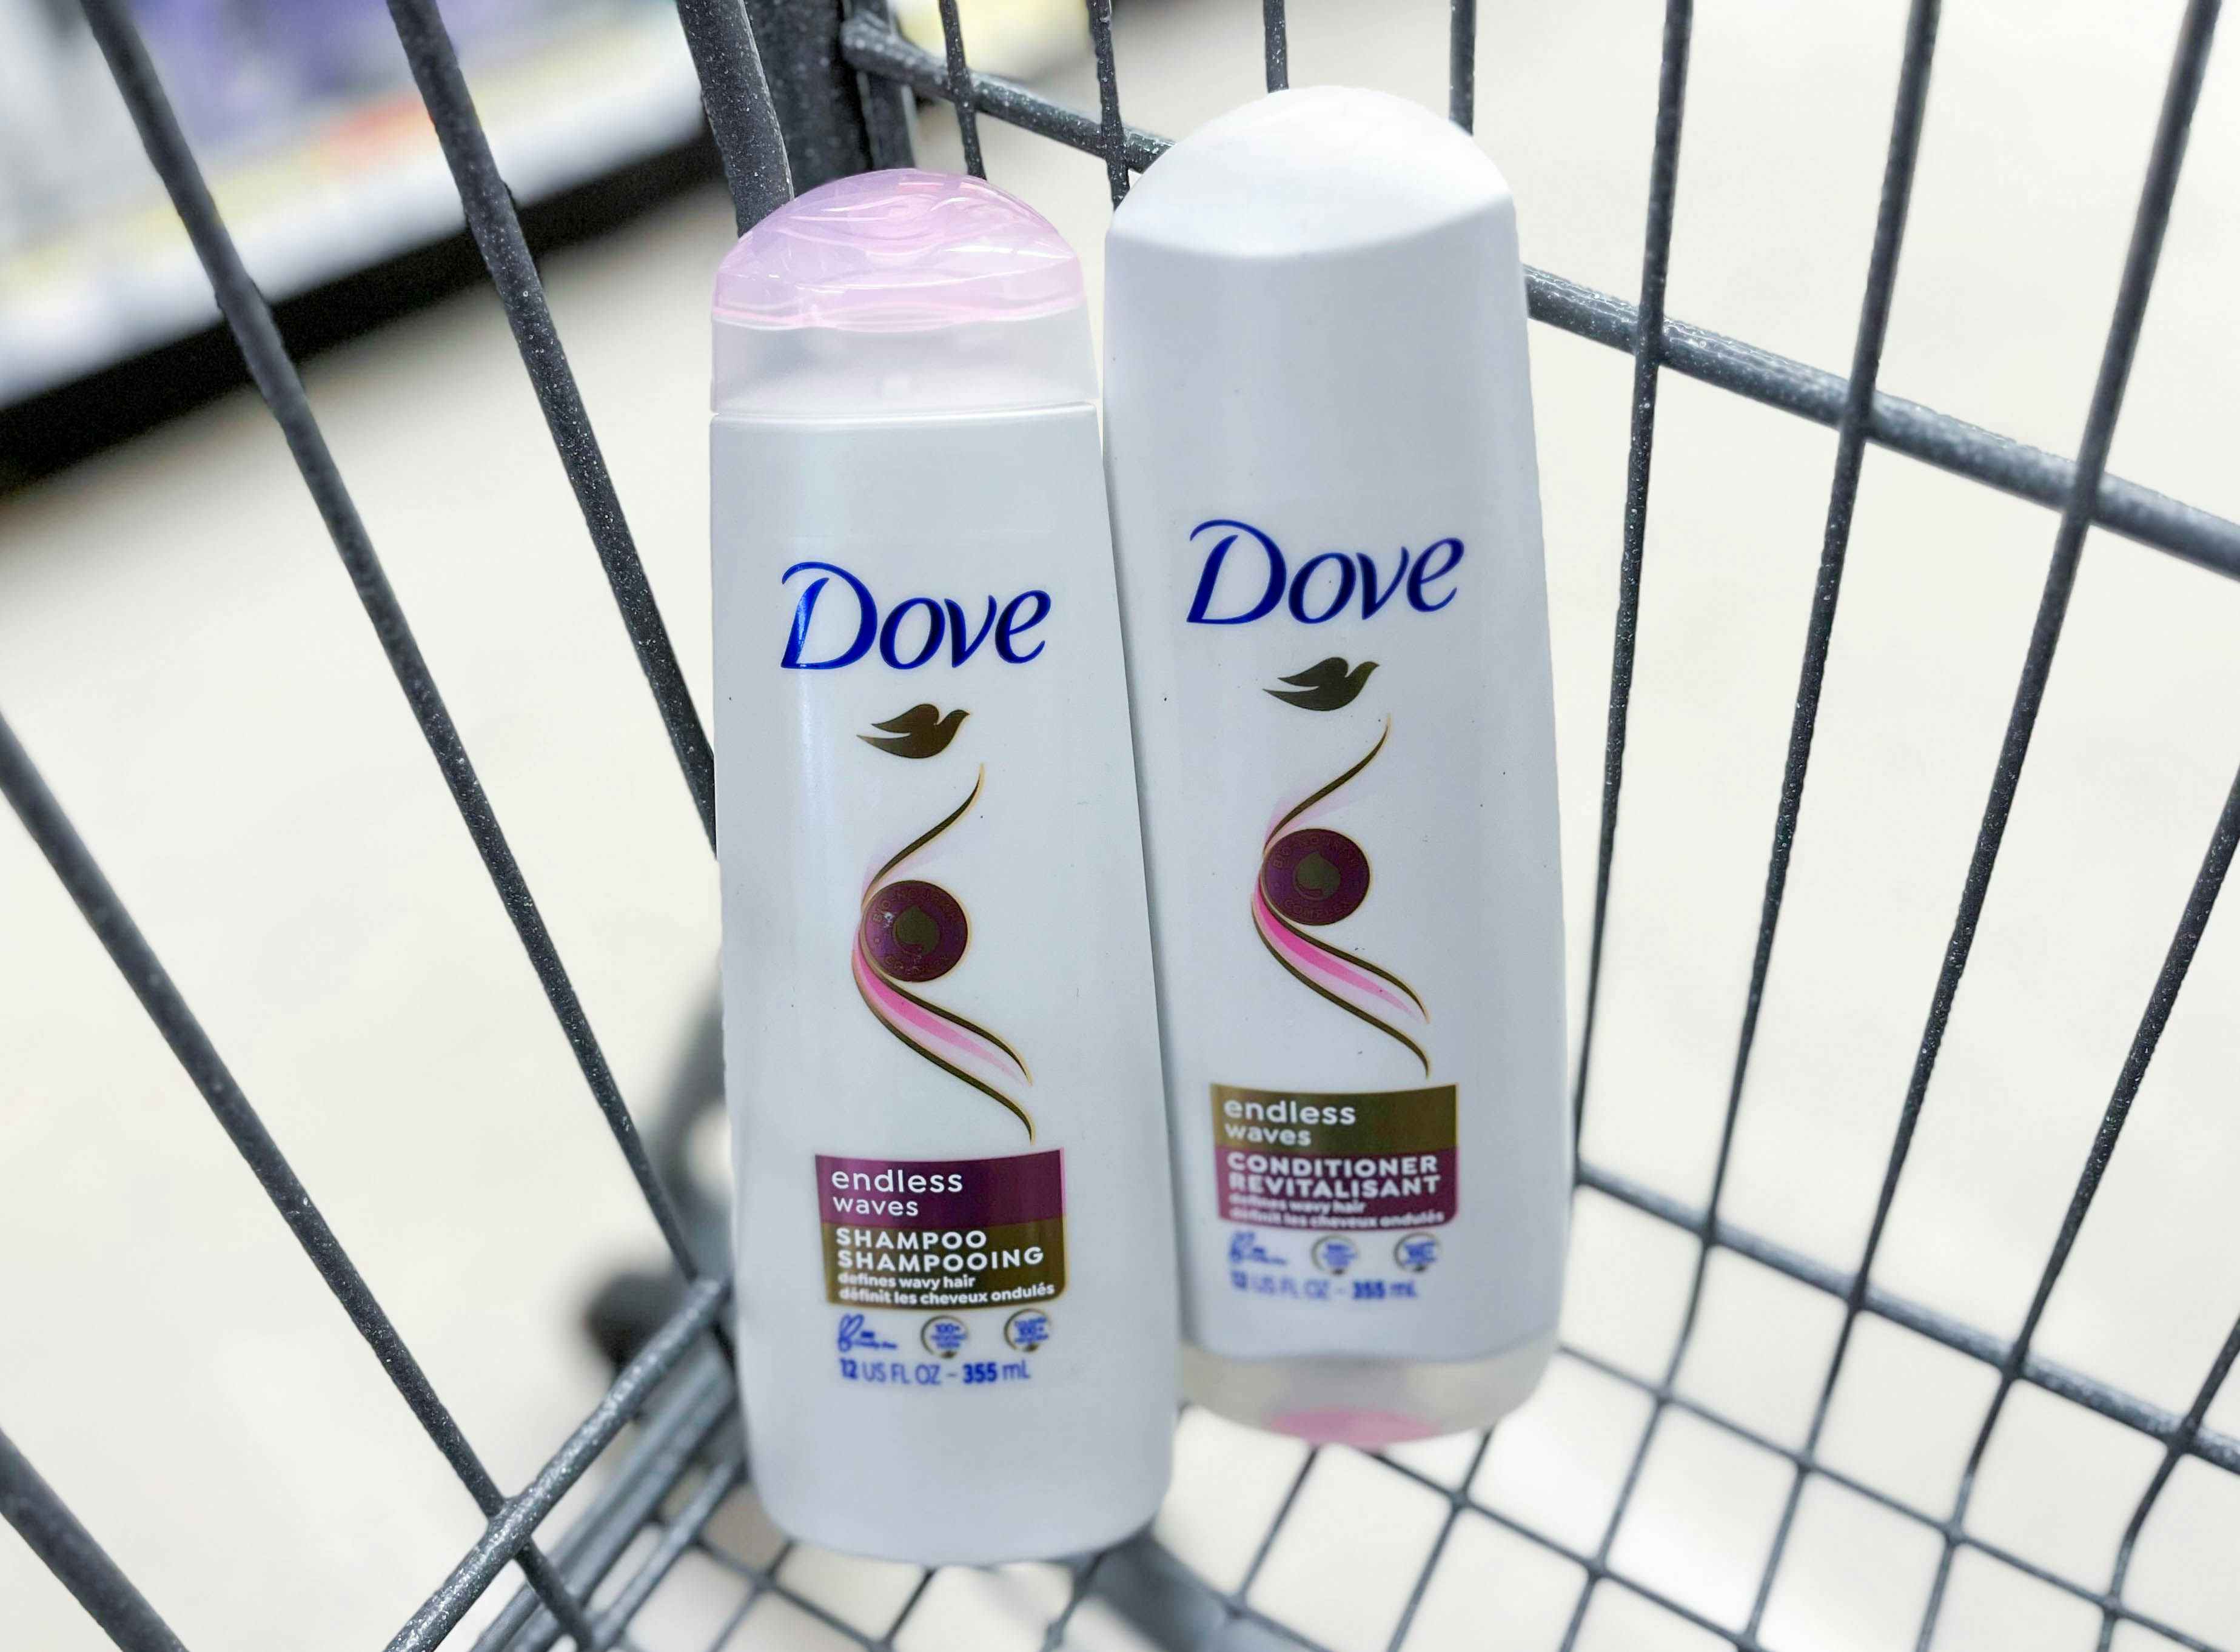 walgreens-dove-endless-wave-shampoo-conditioner-cart-2-101822